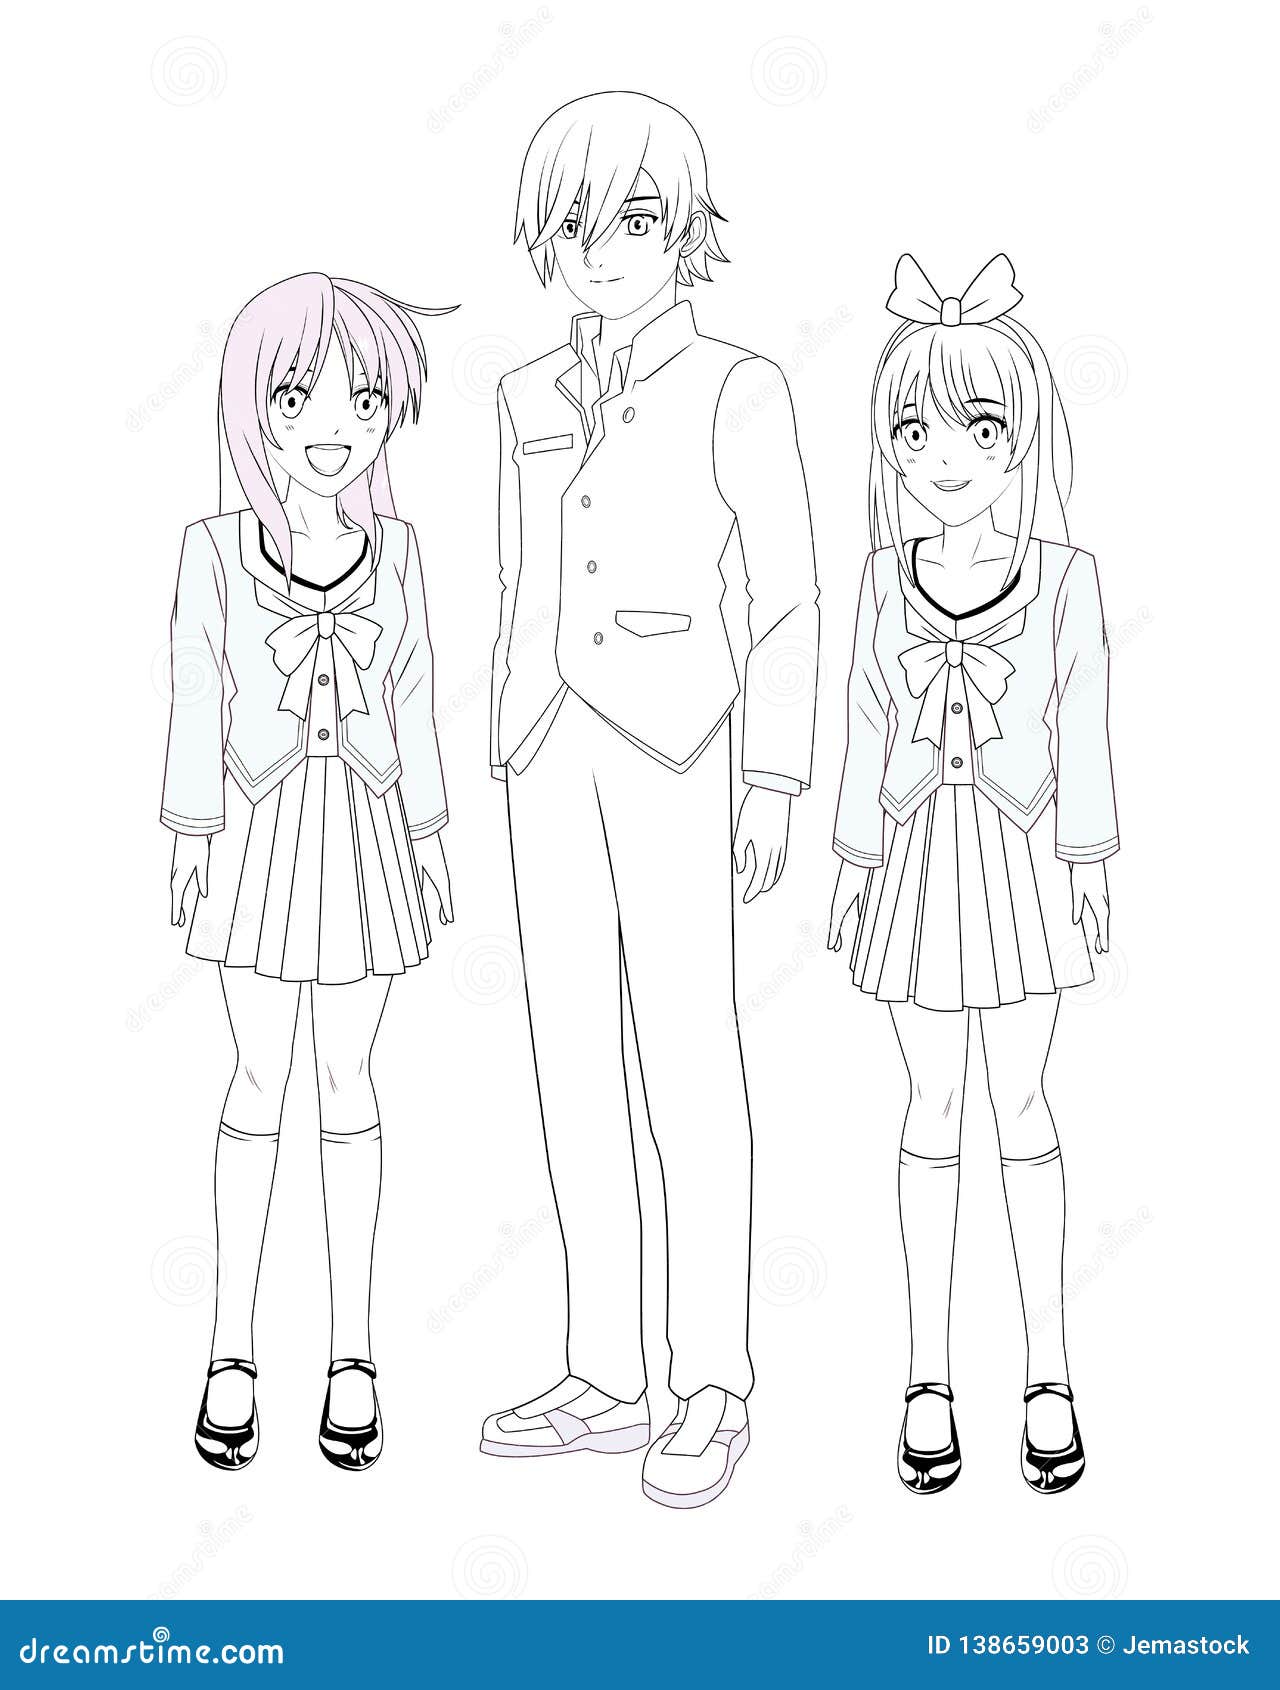 Anime manga group stock vector. Illustration of young - 138659003